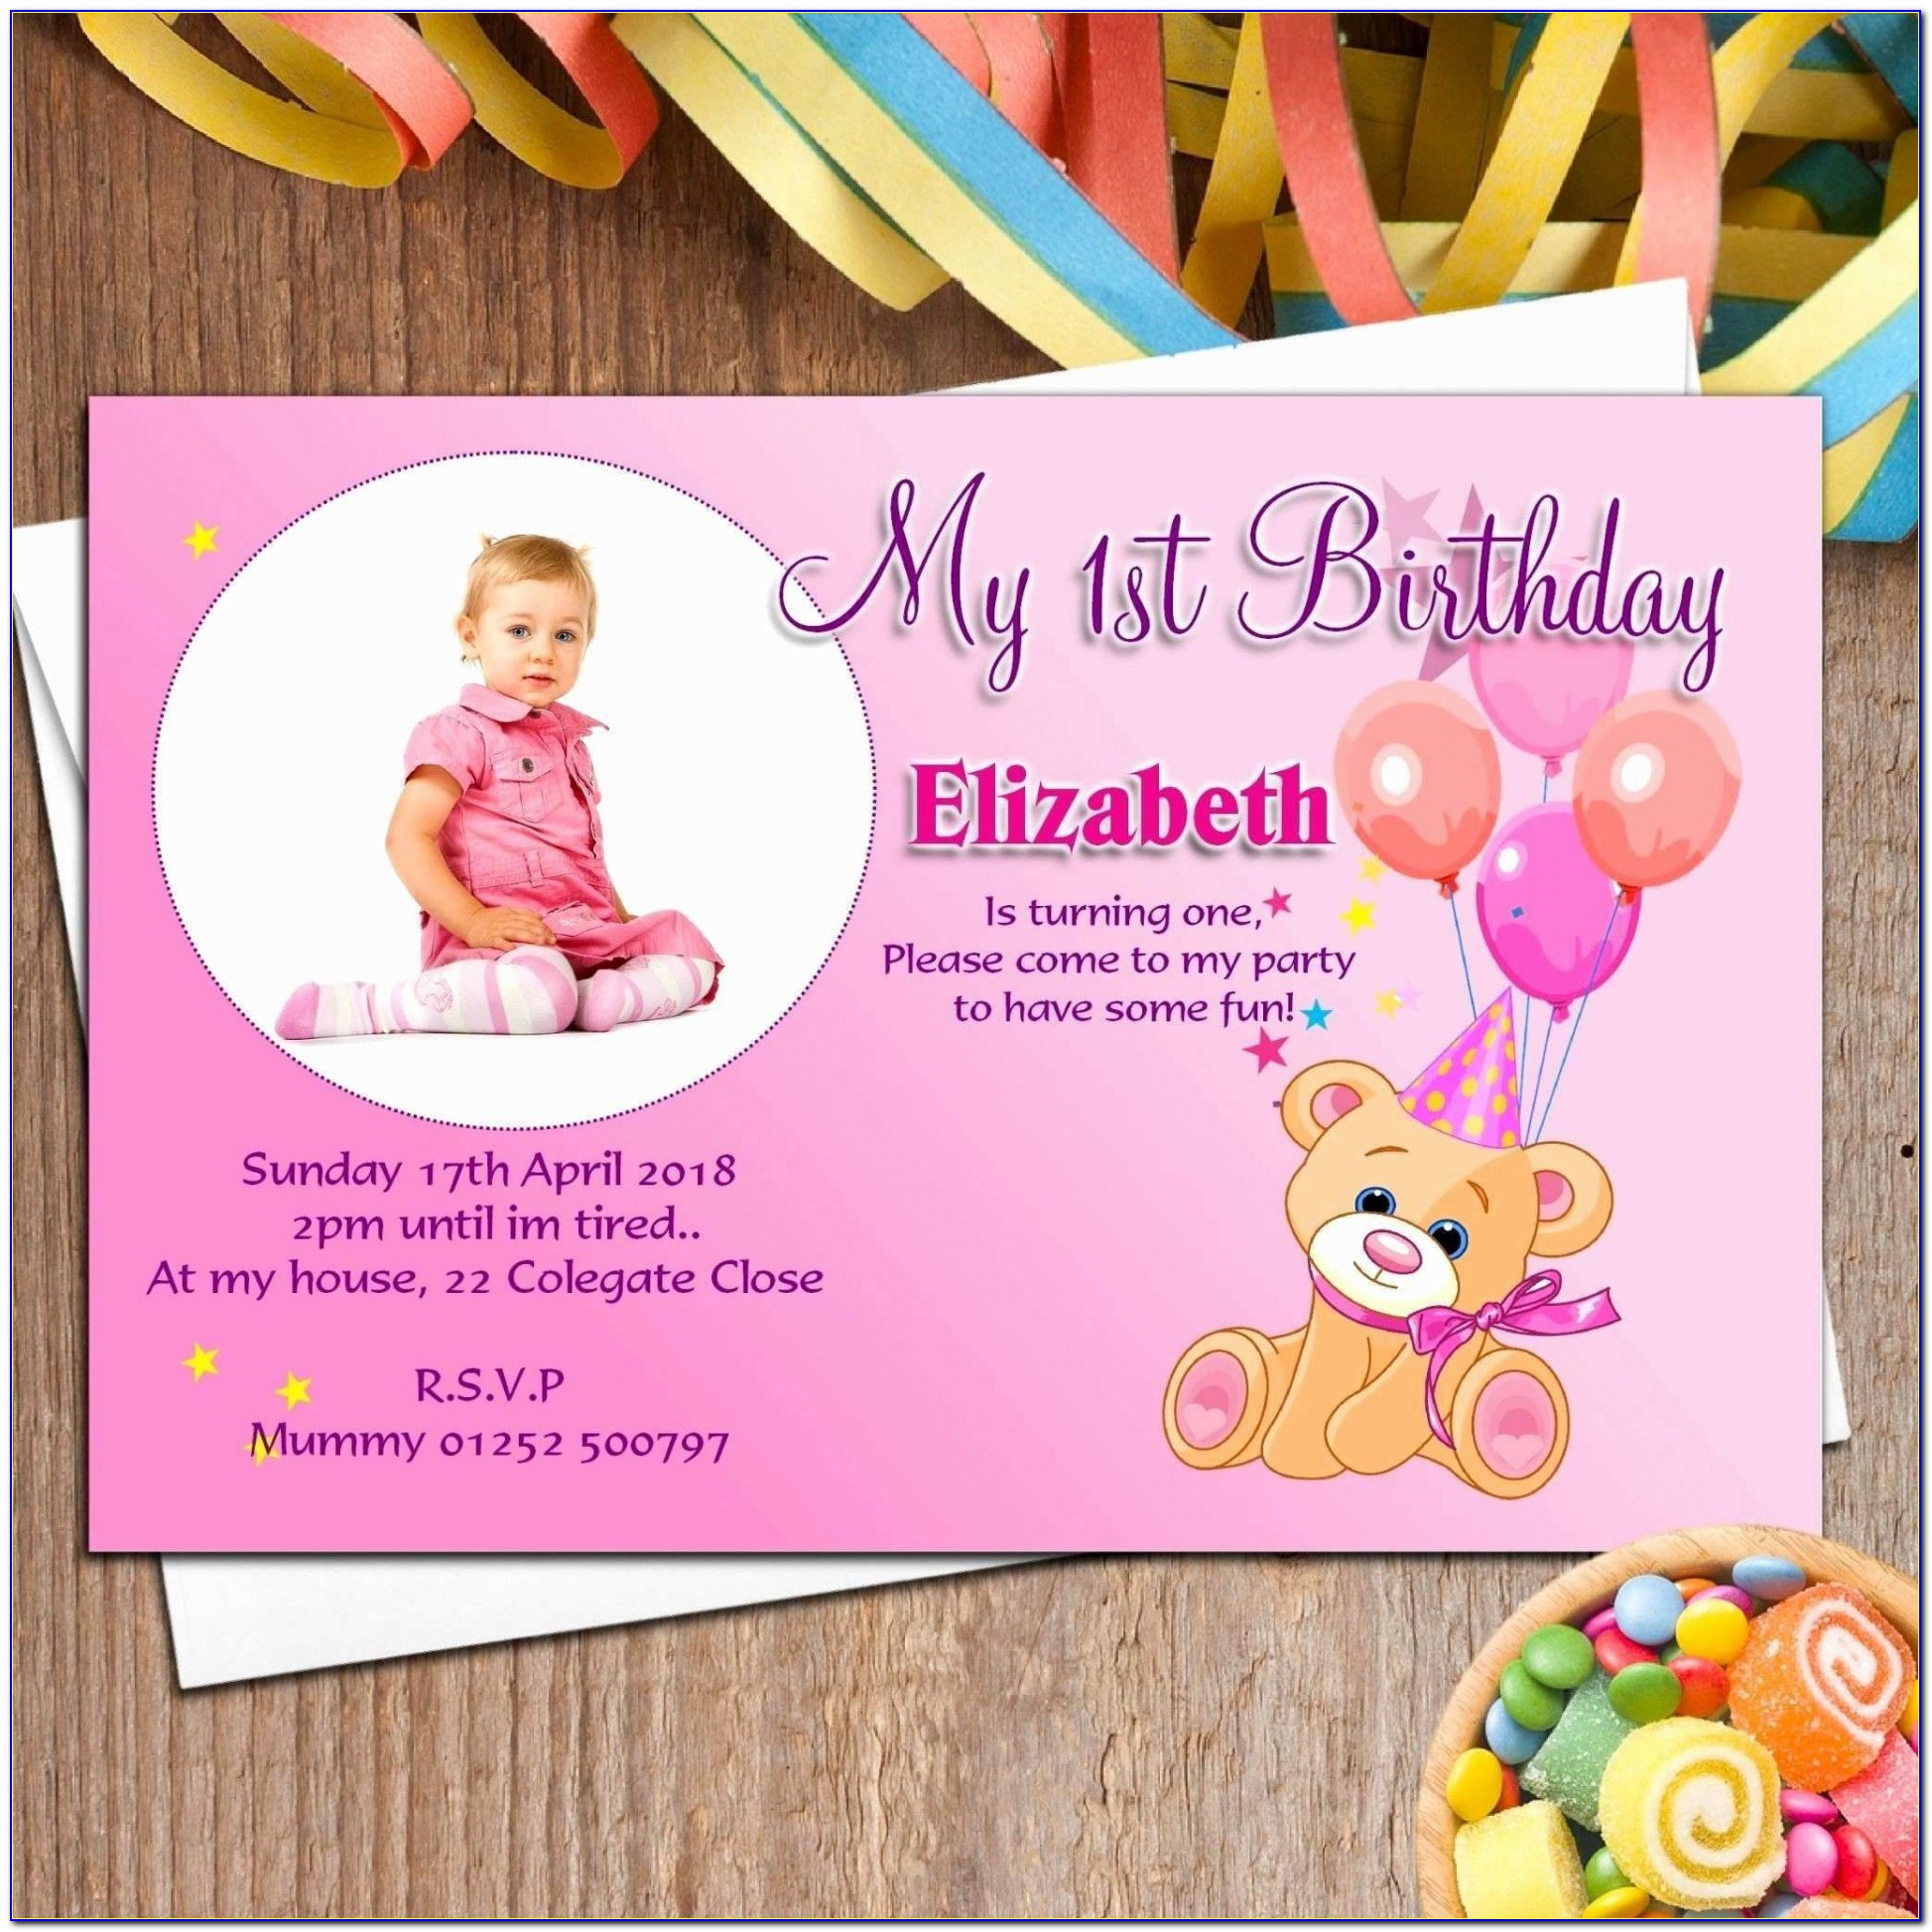 Free Birthday Invitation Card In Marathi